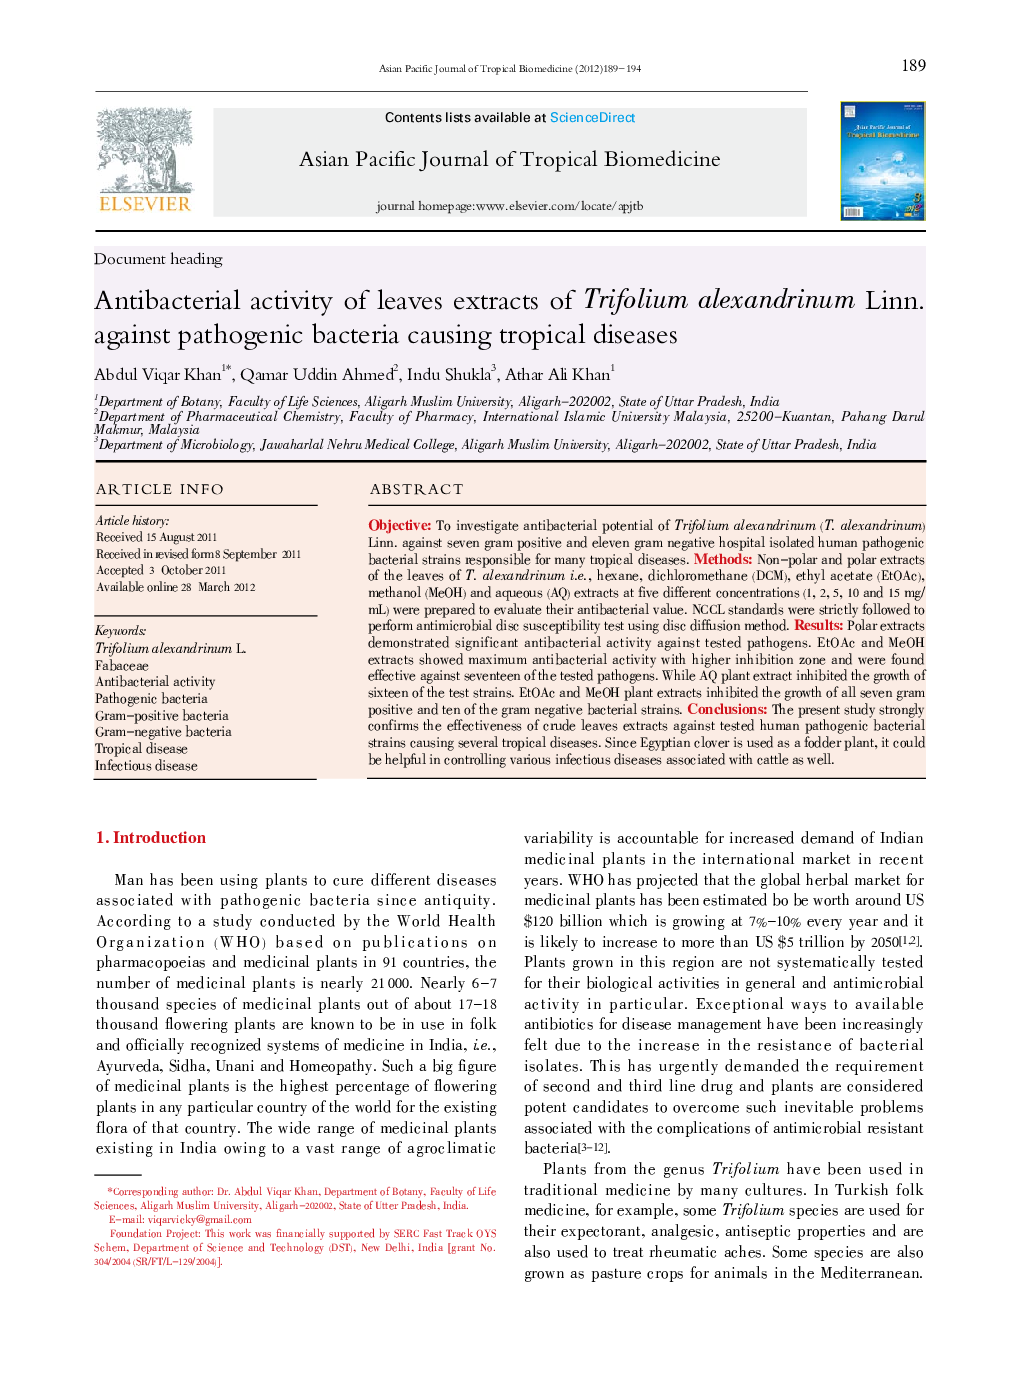 Antibacterial activity of leaves extracts of Trifolium alexandrinum Linn. against pathogenic bacteria causing tropical diseases